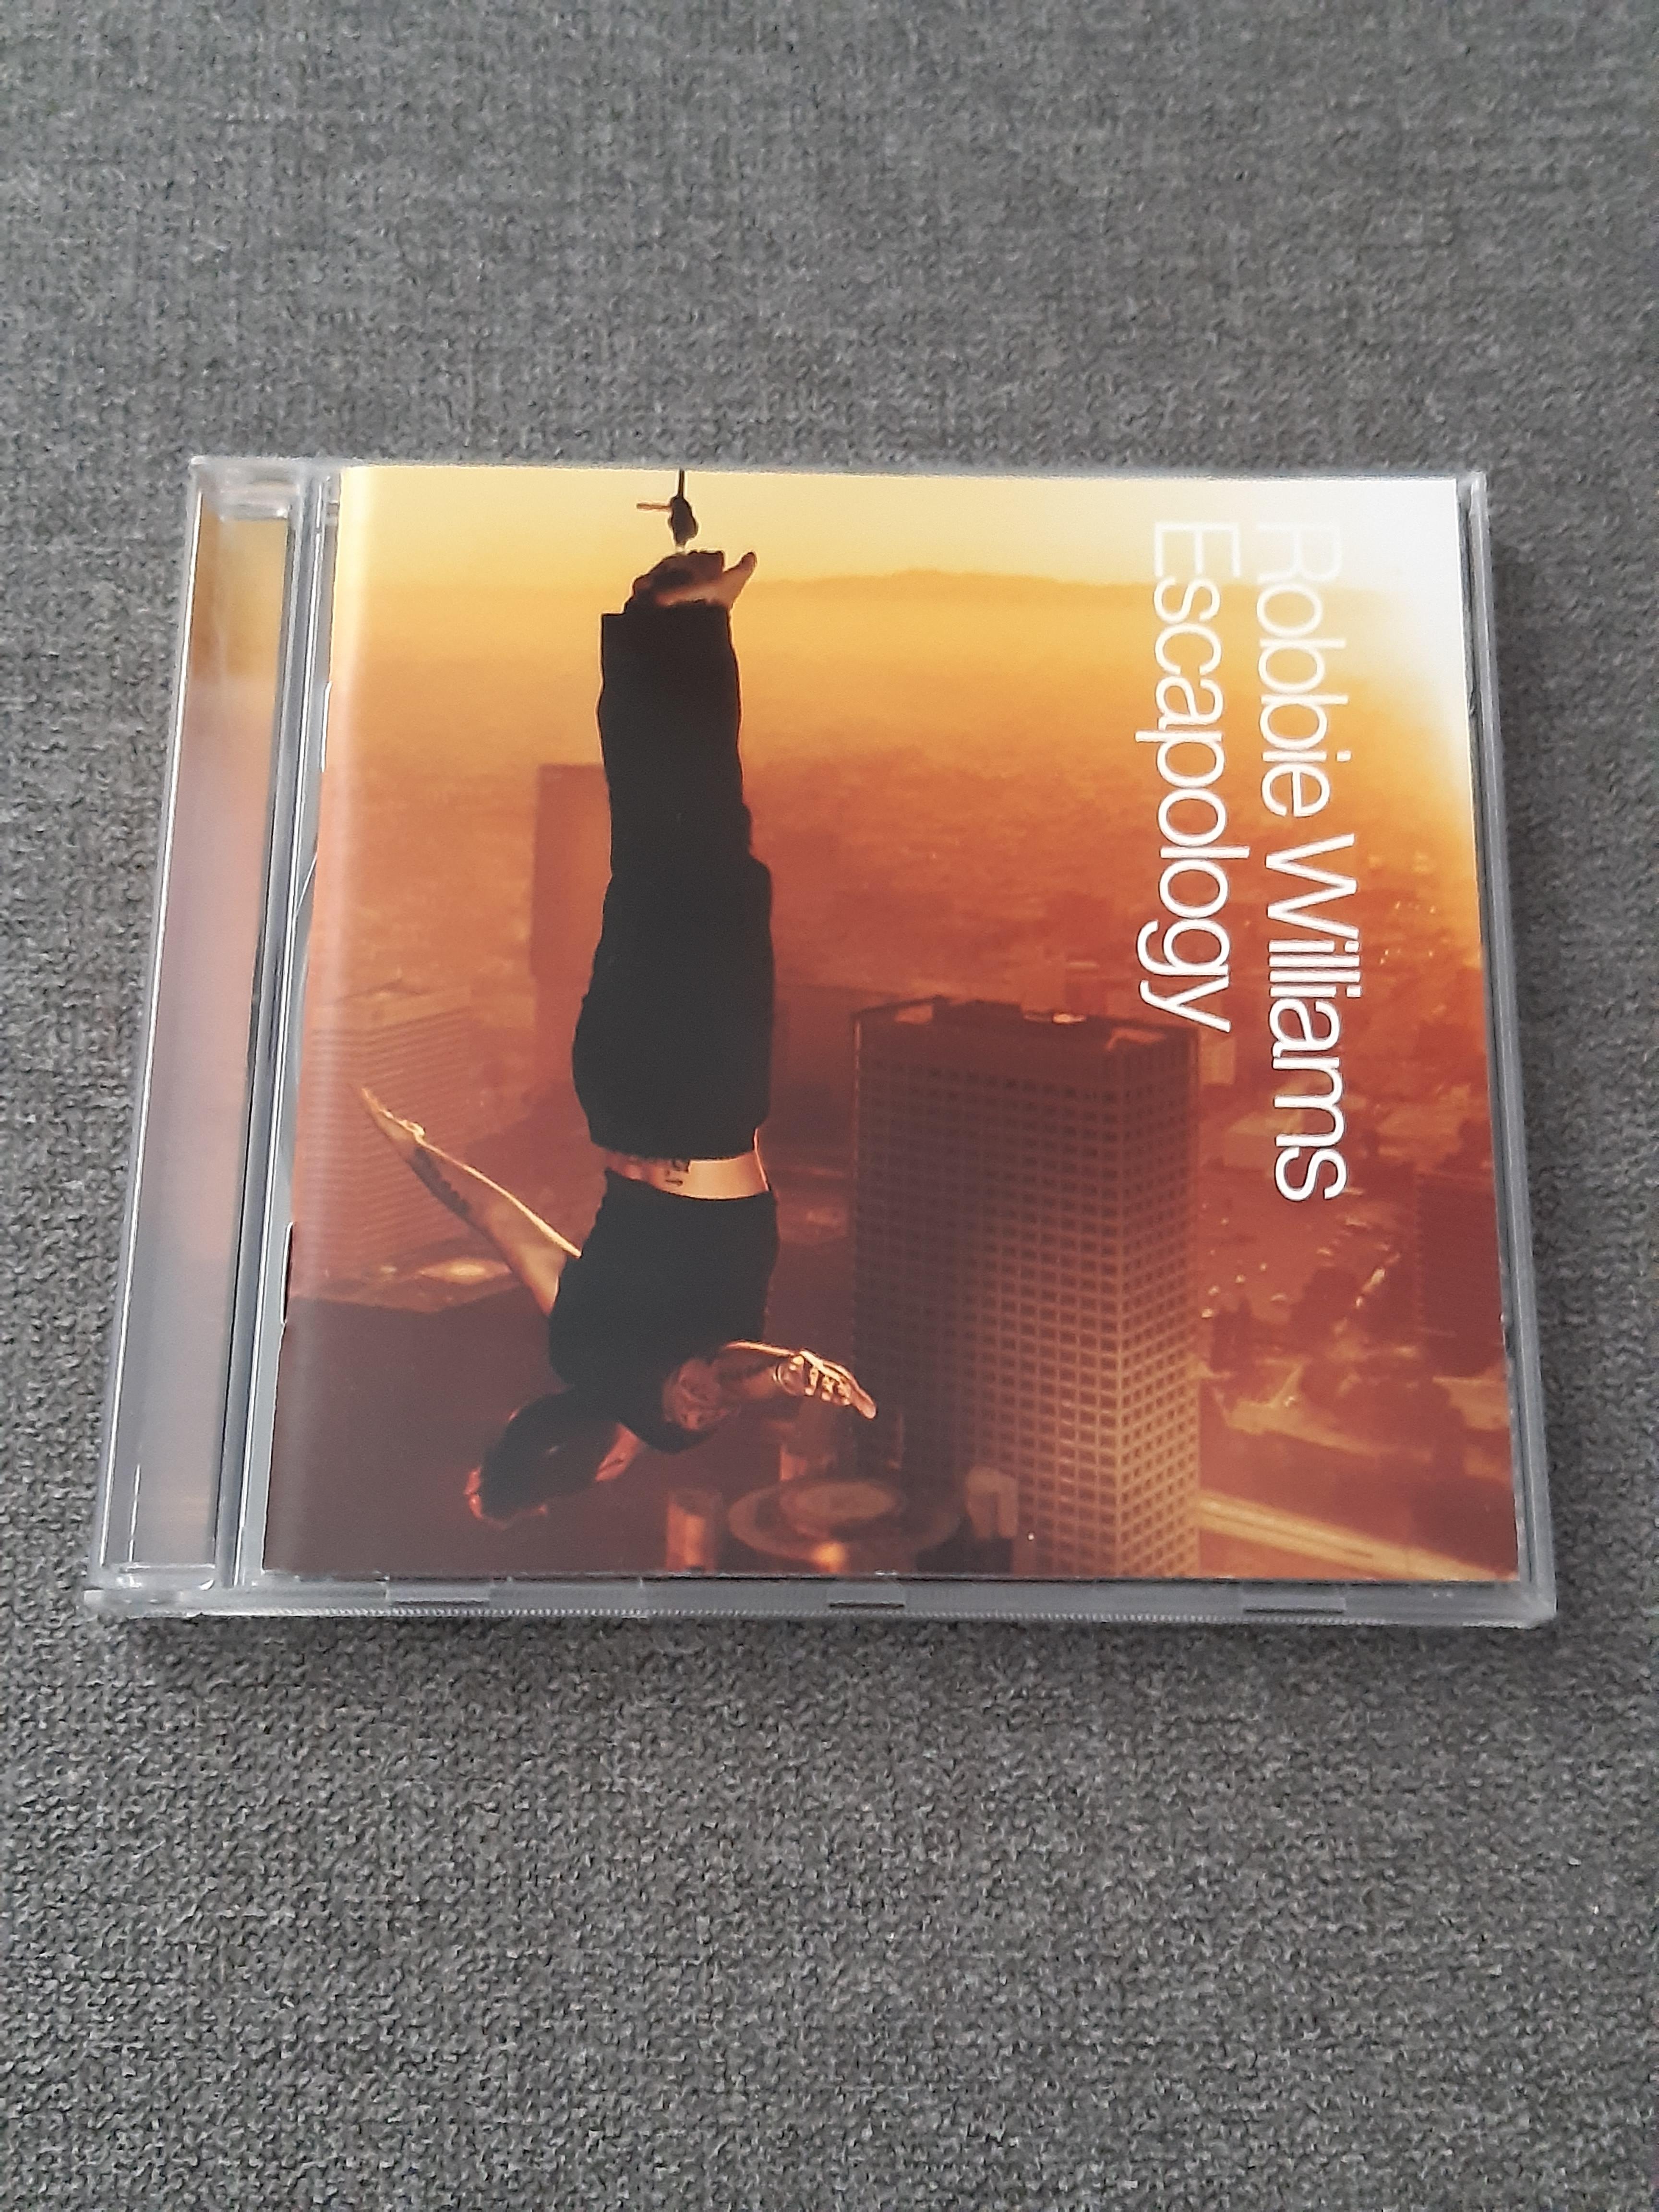 Robbie Williams - Escapology - CD (käytetty)